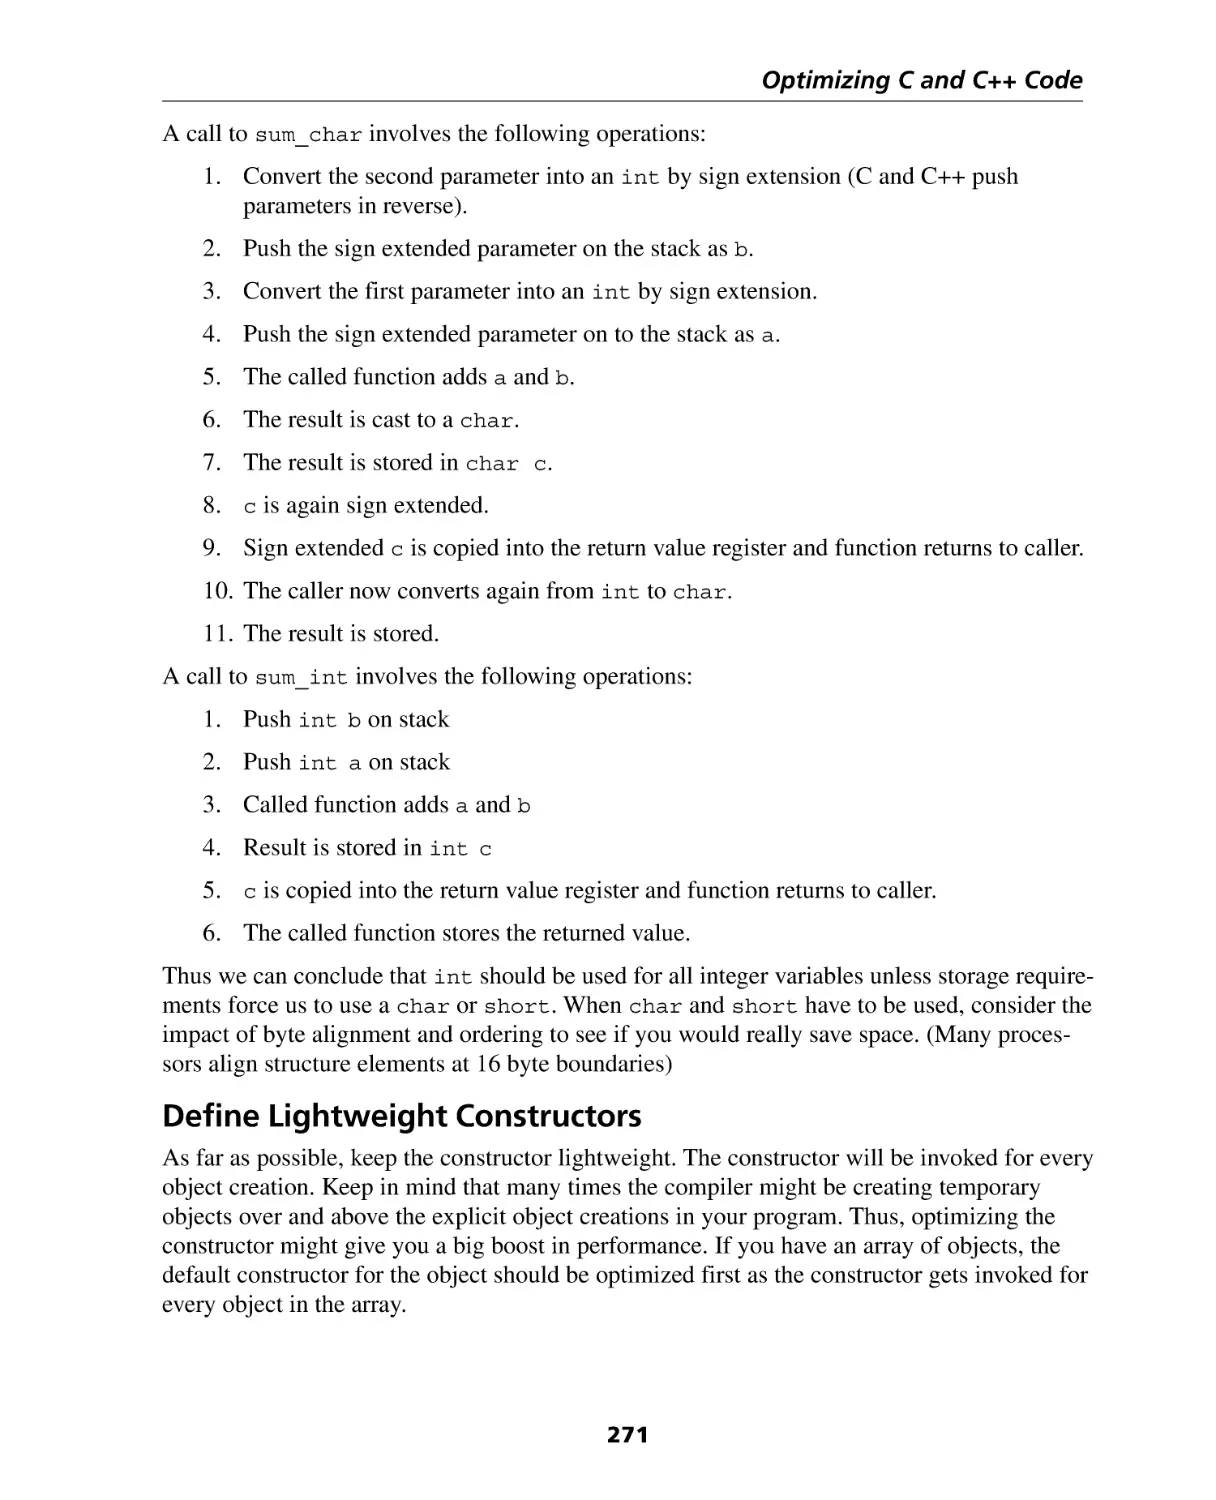 Define Lightweight Constructors